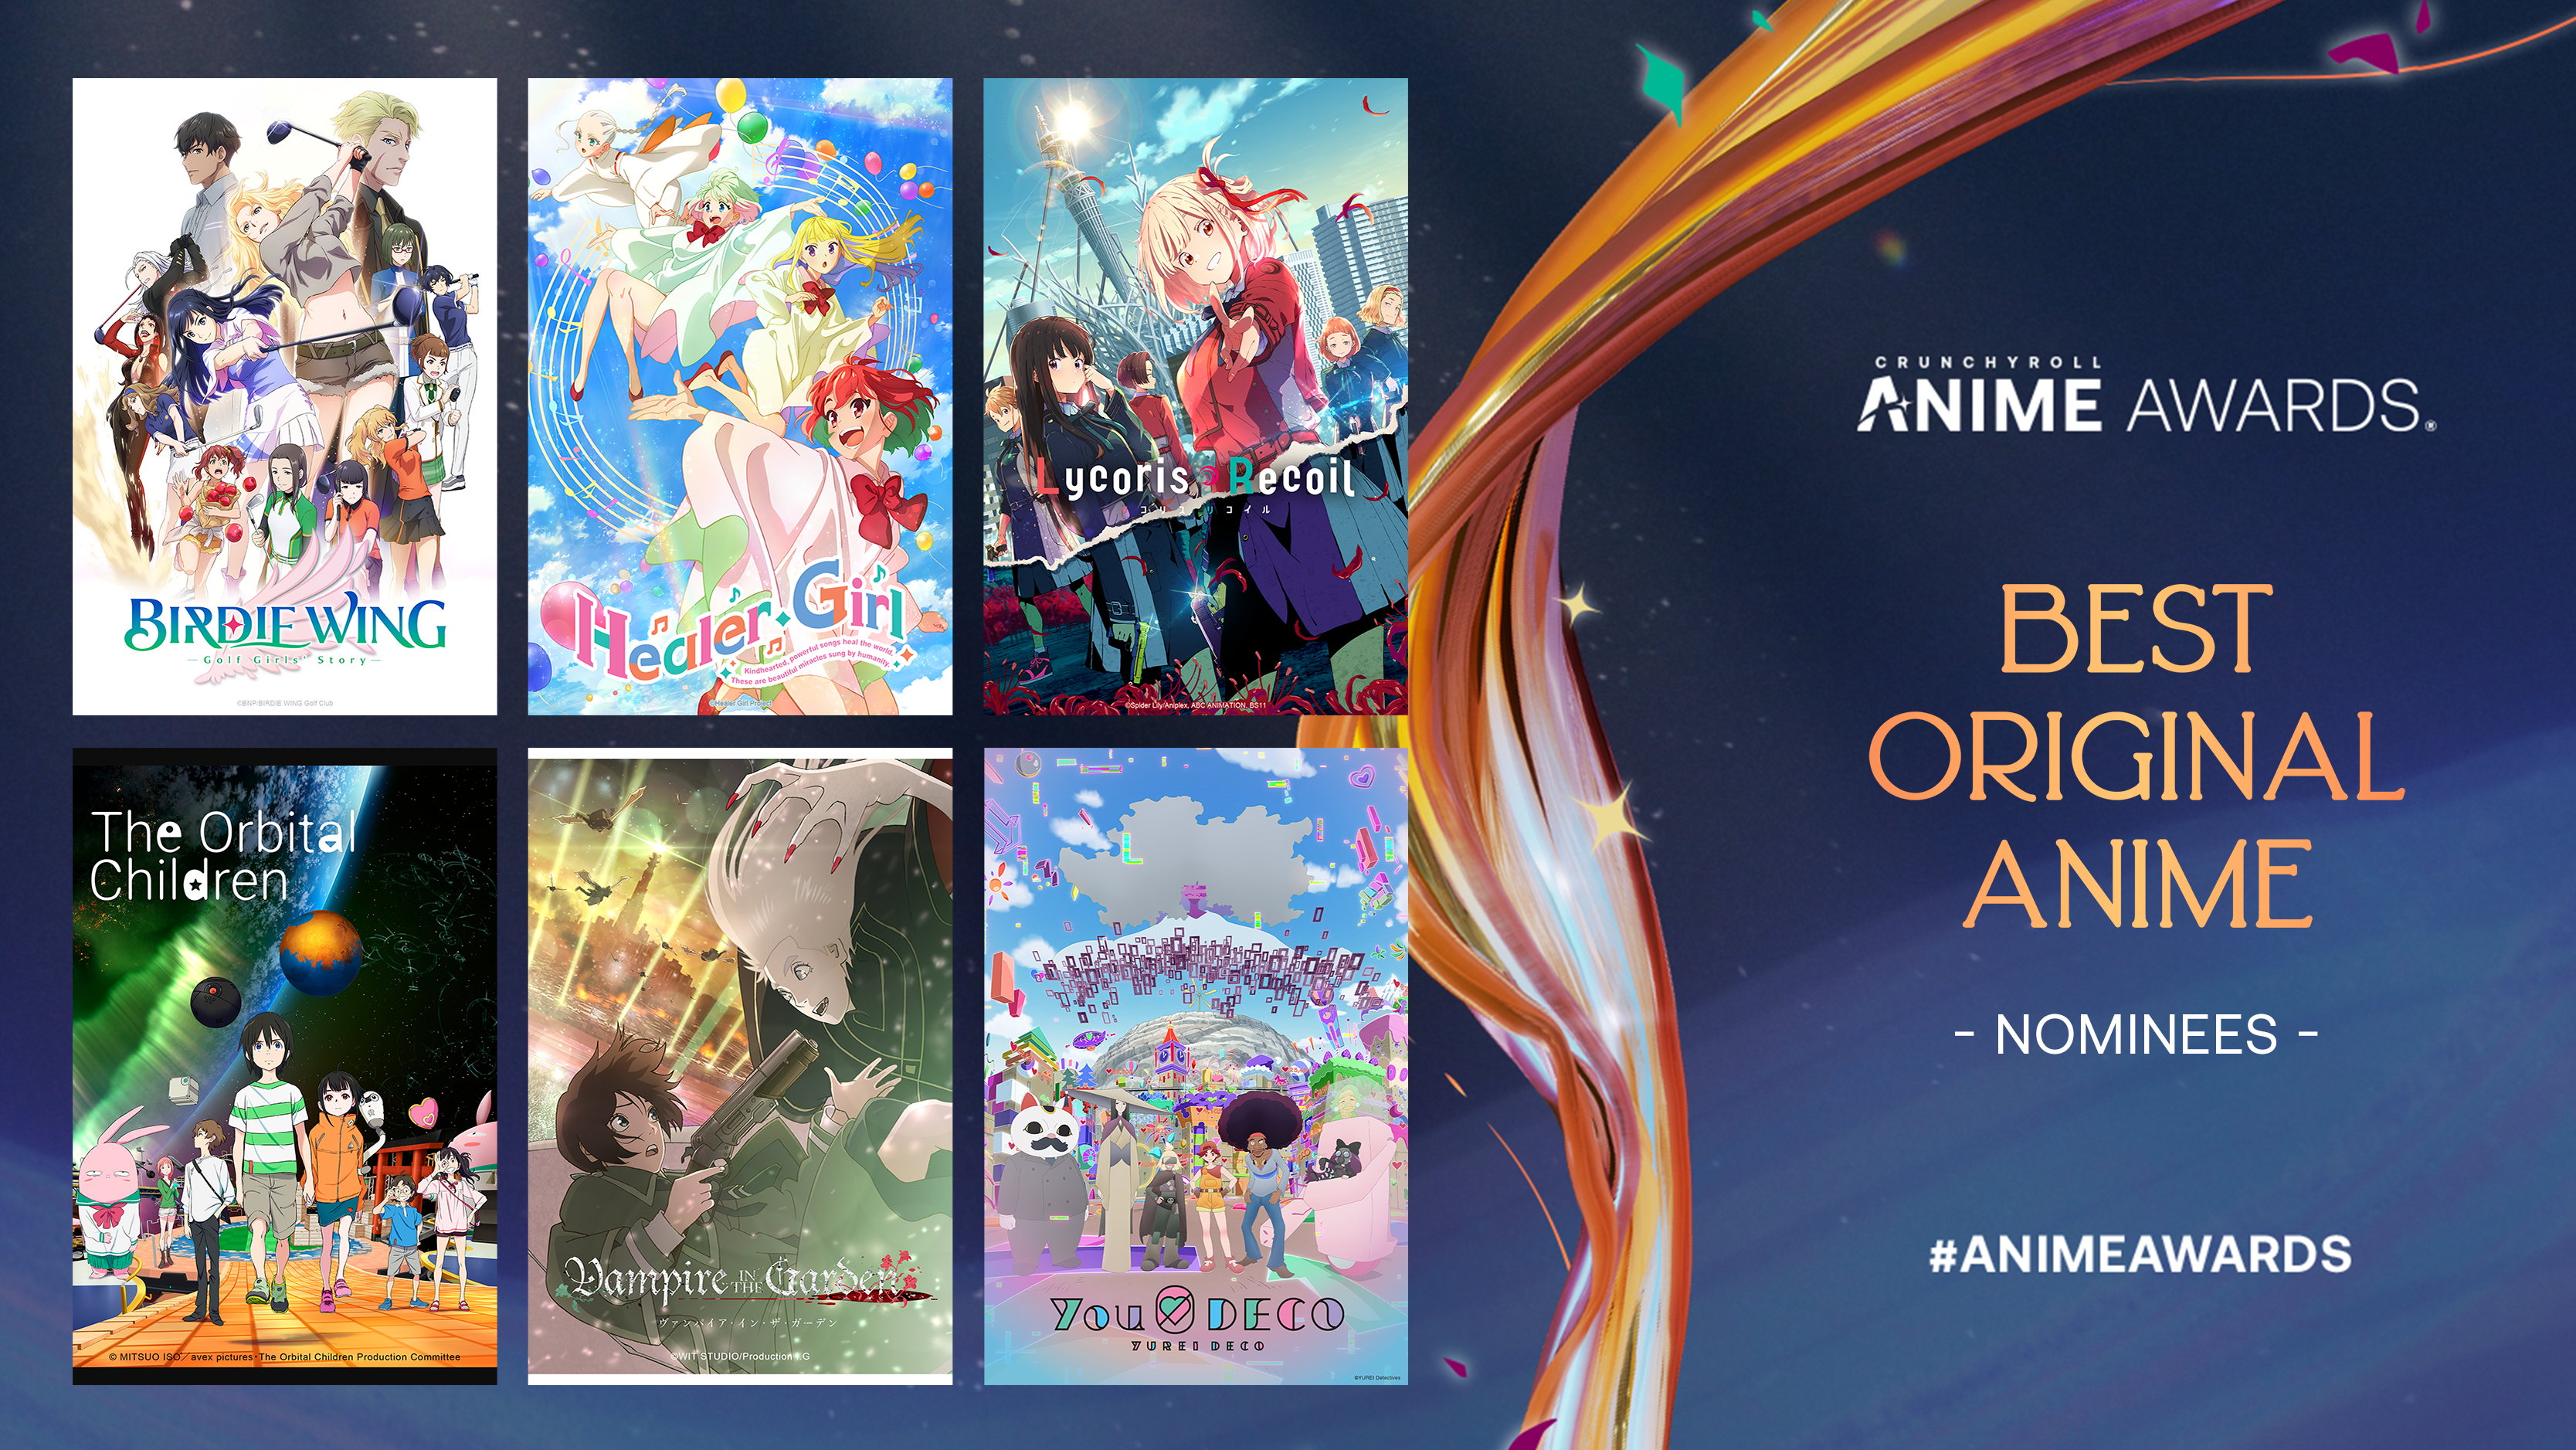 Eizouken, Jujtsu Kaisen e Haikyuu!! se destacam no Anime Awards 2021-demhanvico.com.vn